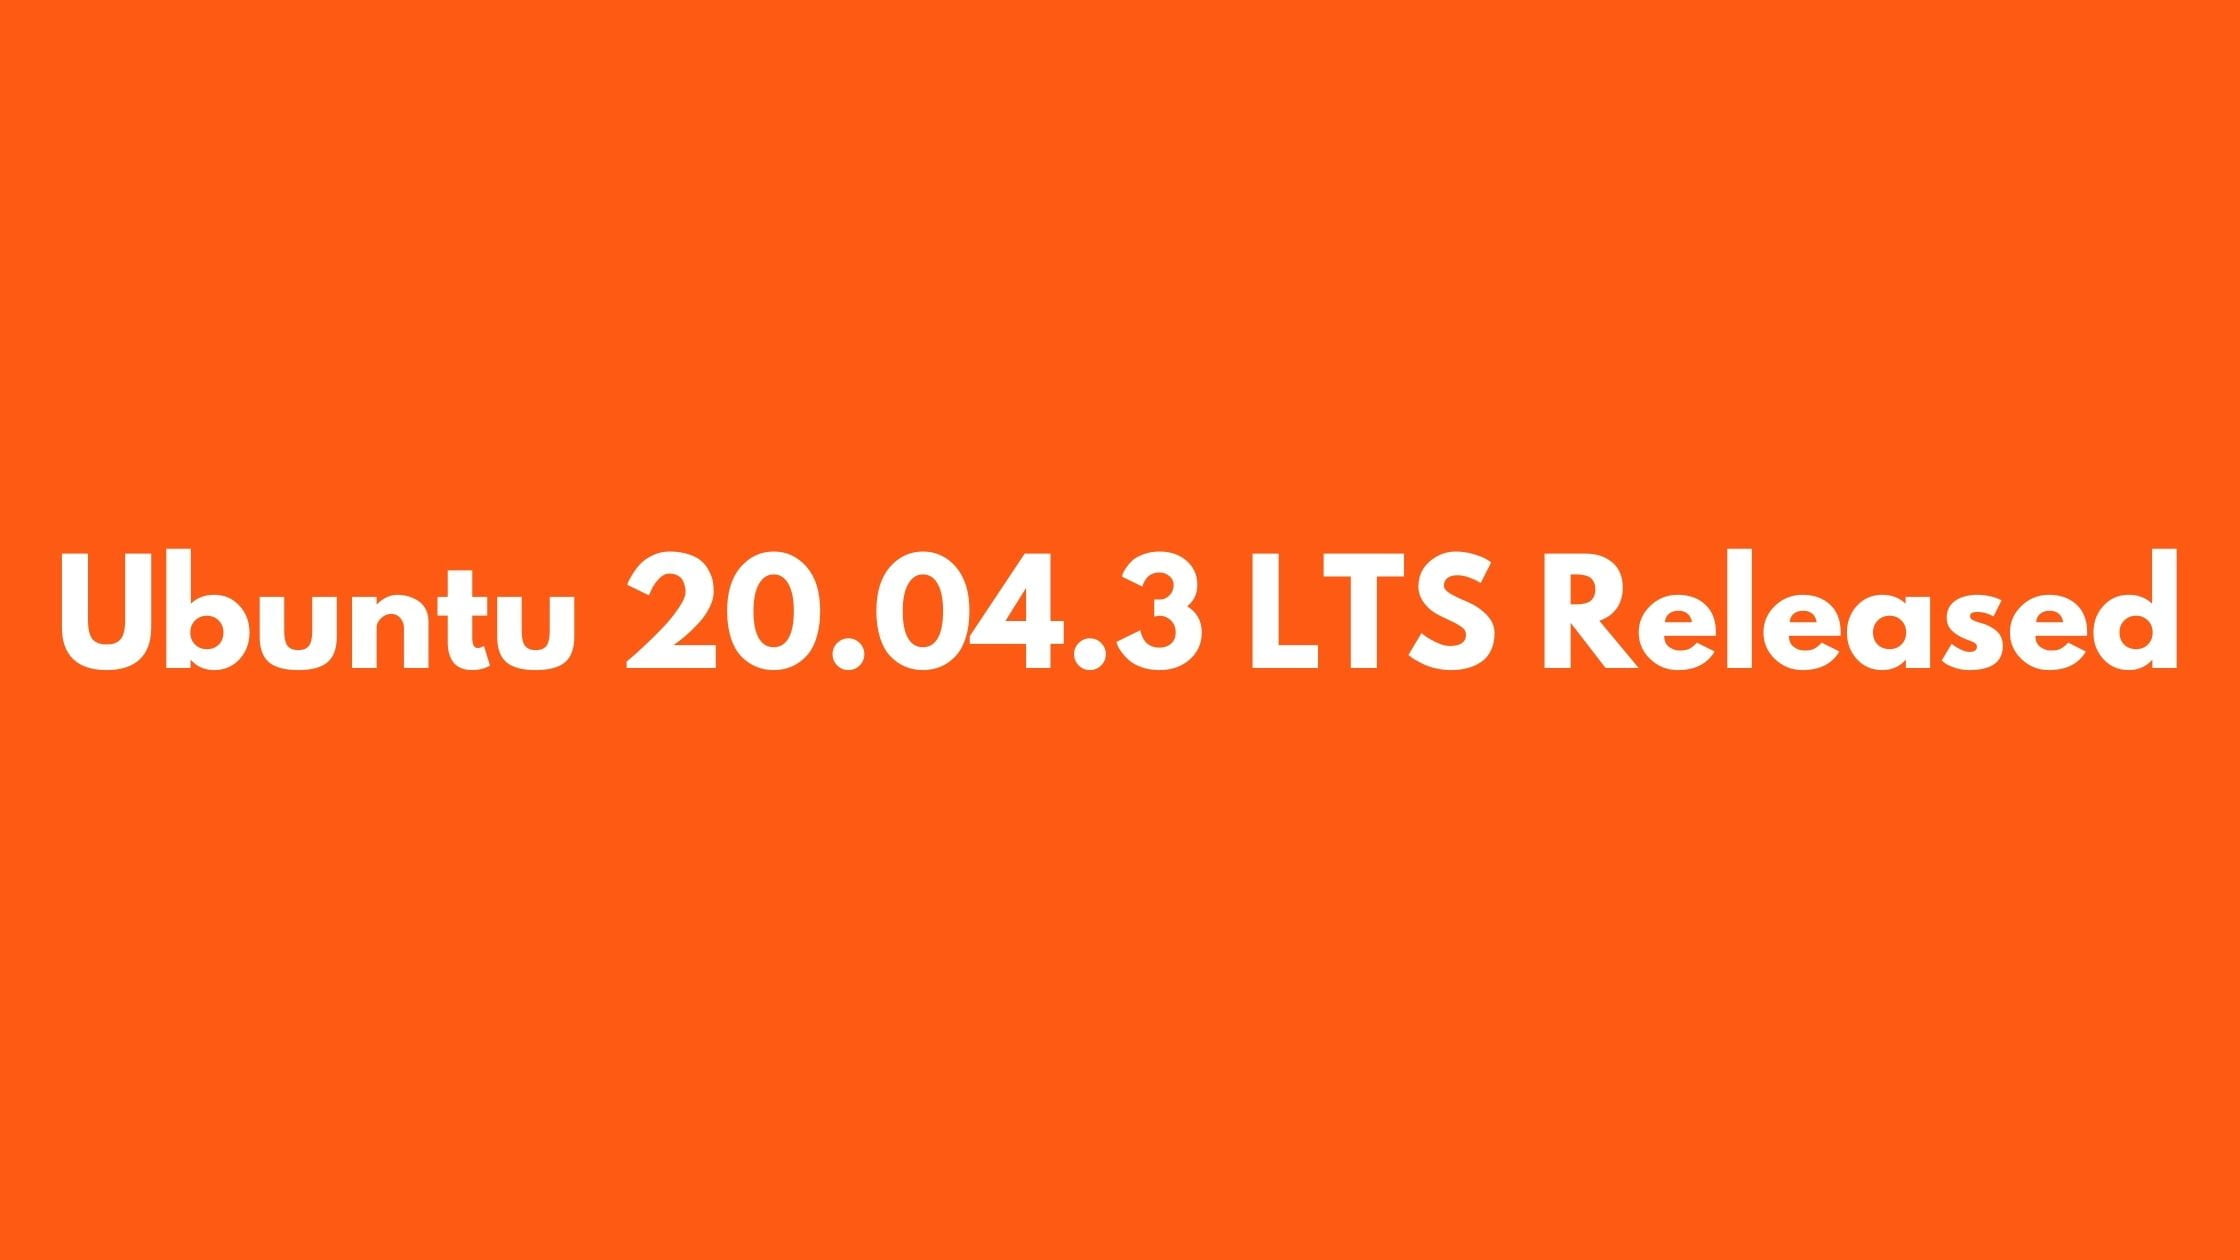 Ubuntu 20.04.3 LTS Released